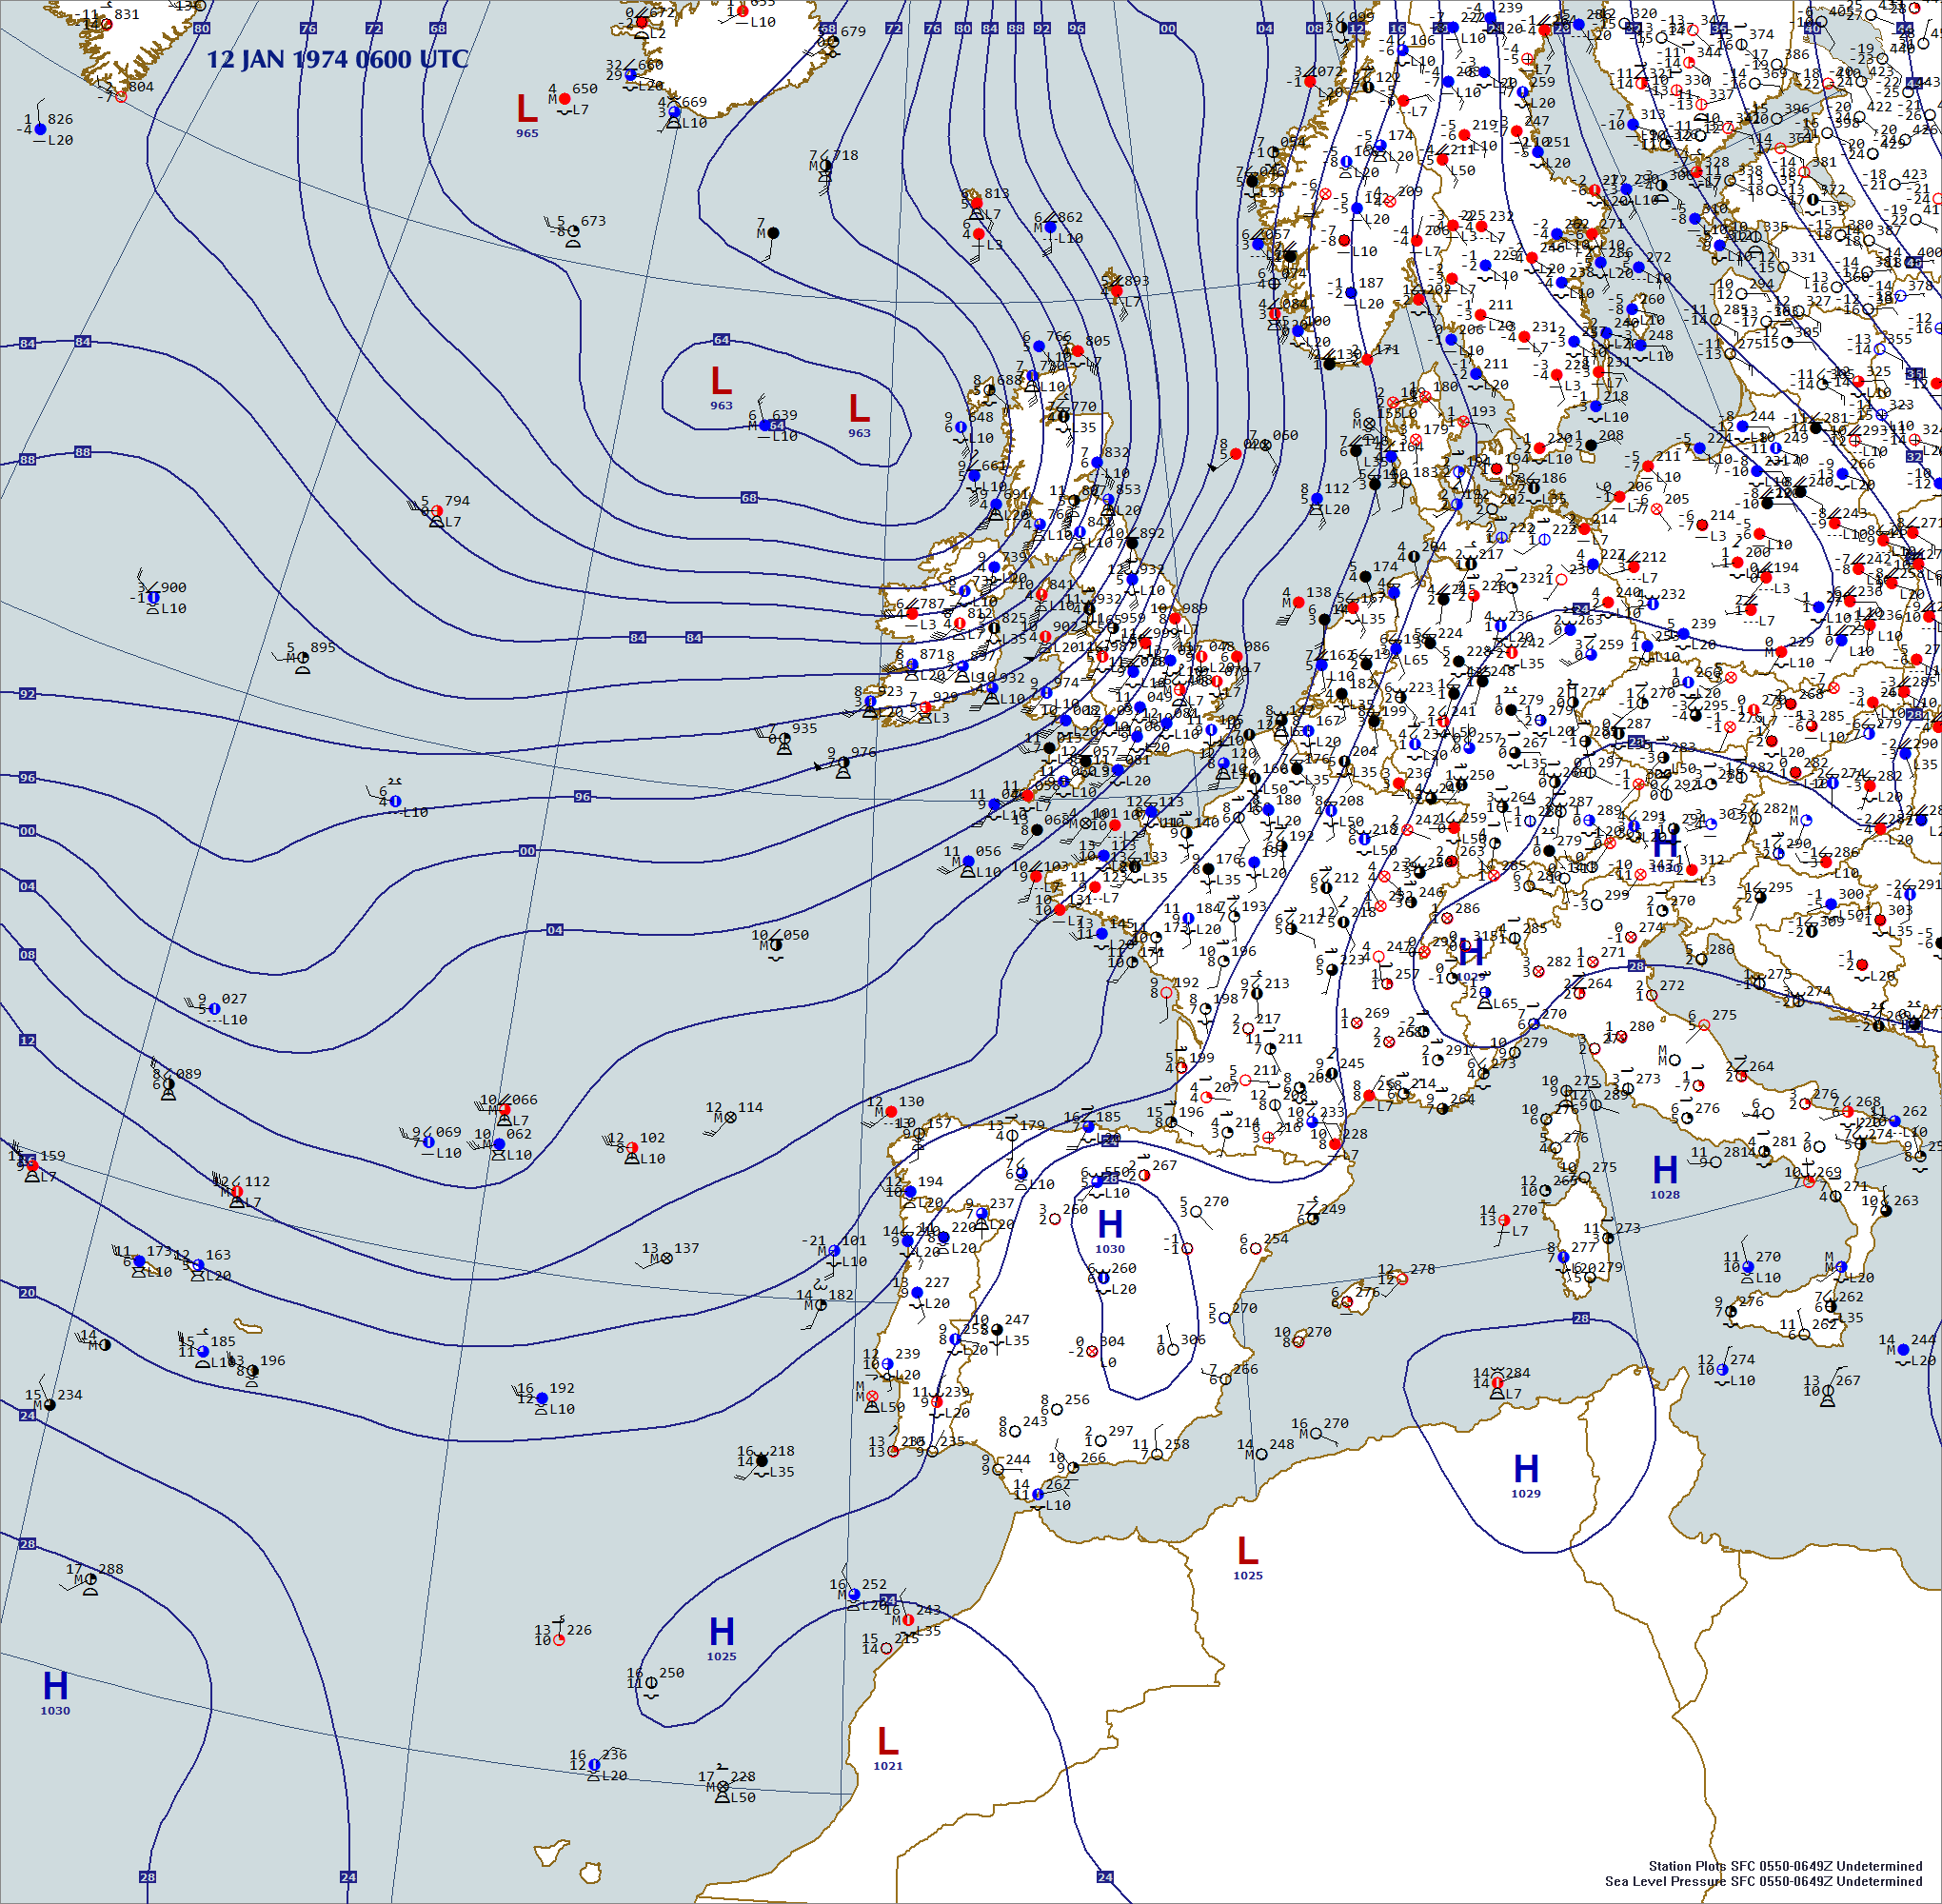 European Synoptic Weather Chart